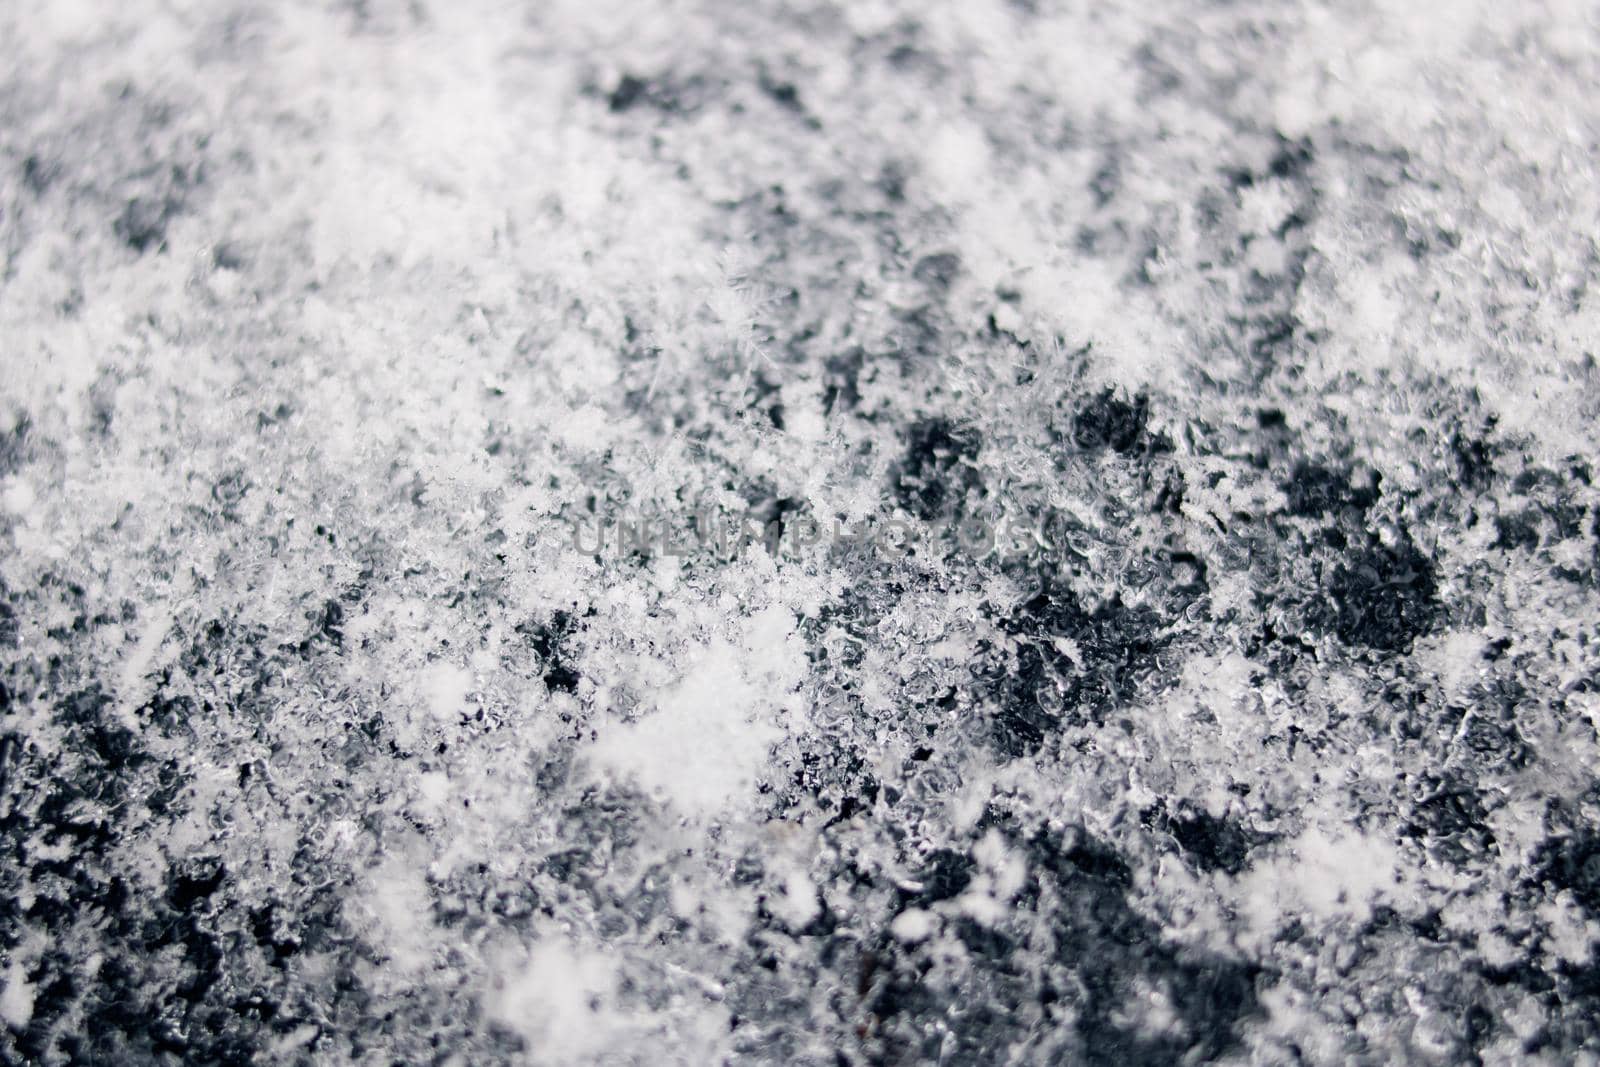 White snowflakes on black surface macro photo by Vera1703